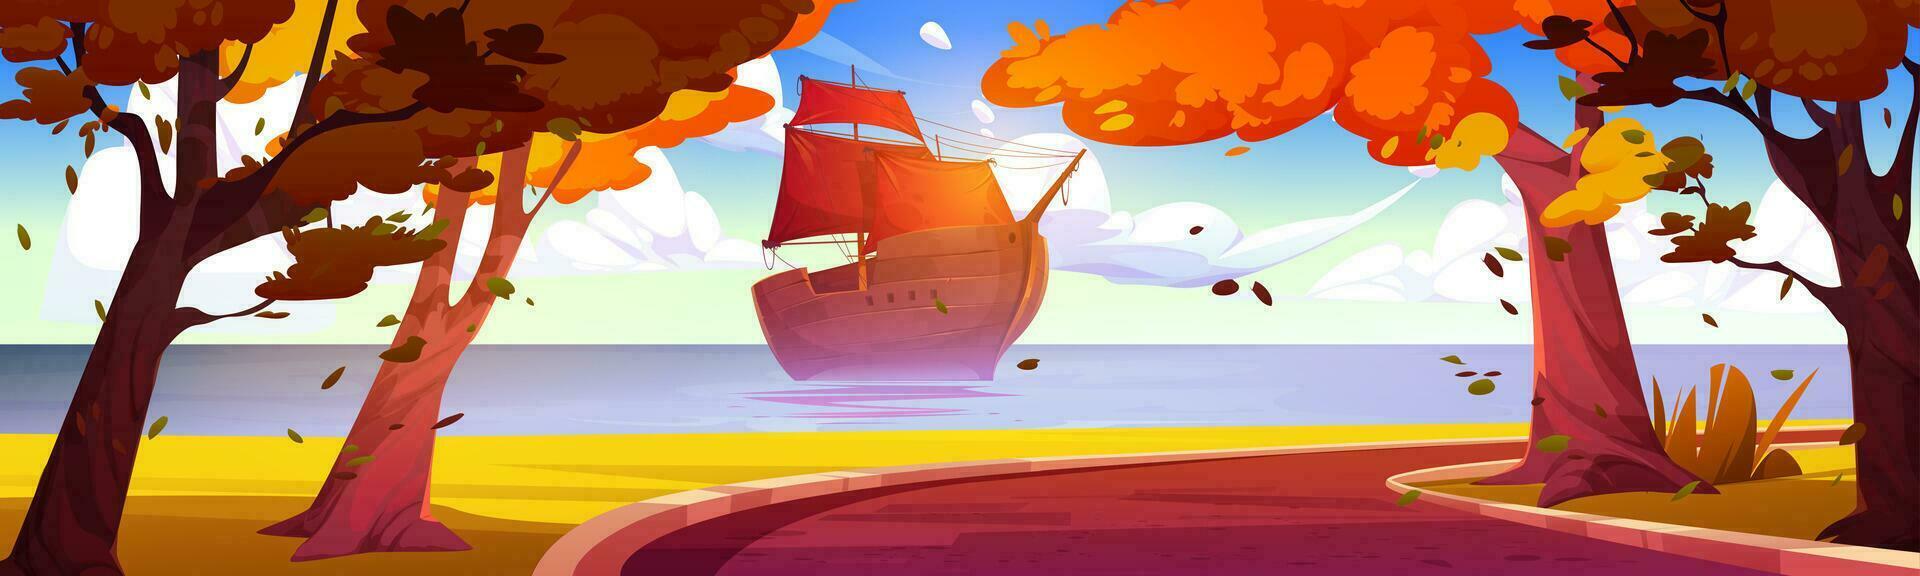 Karikatur Boot mit rot Segel im Meer, Herbst Park vektor